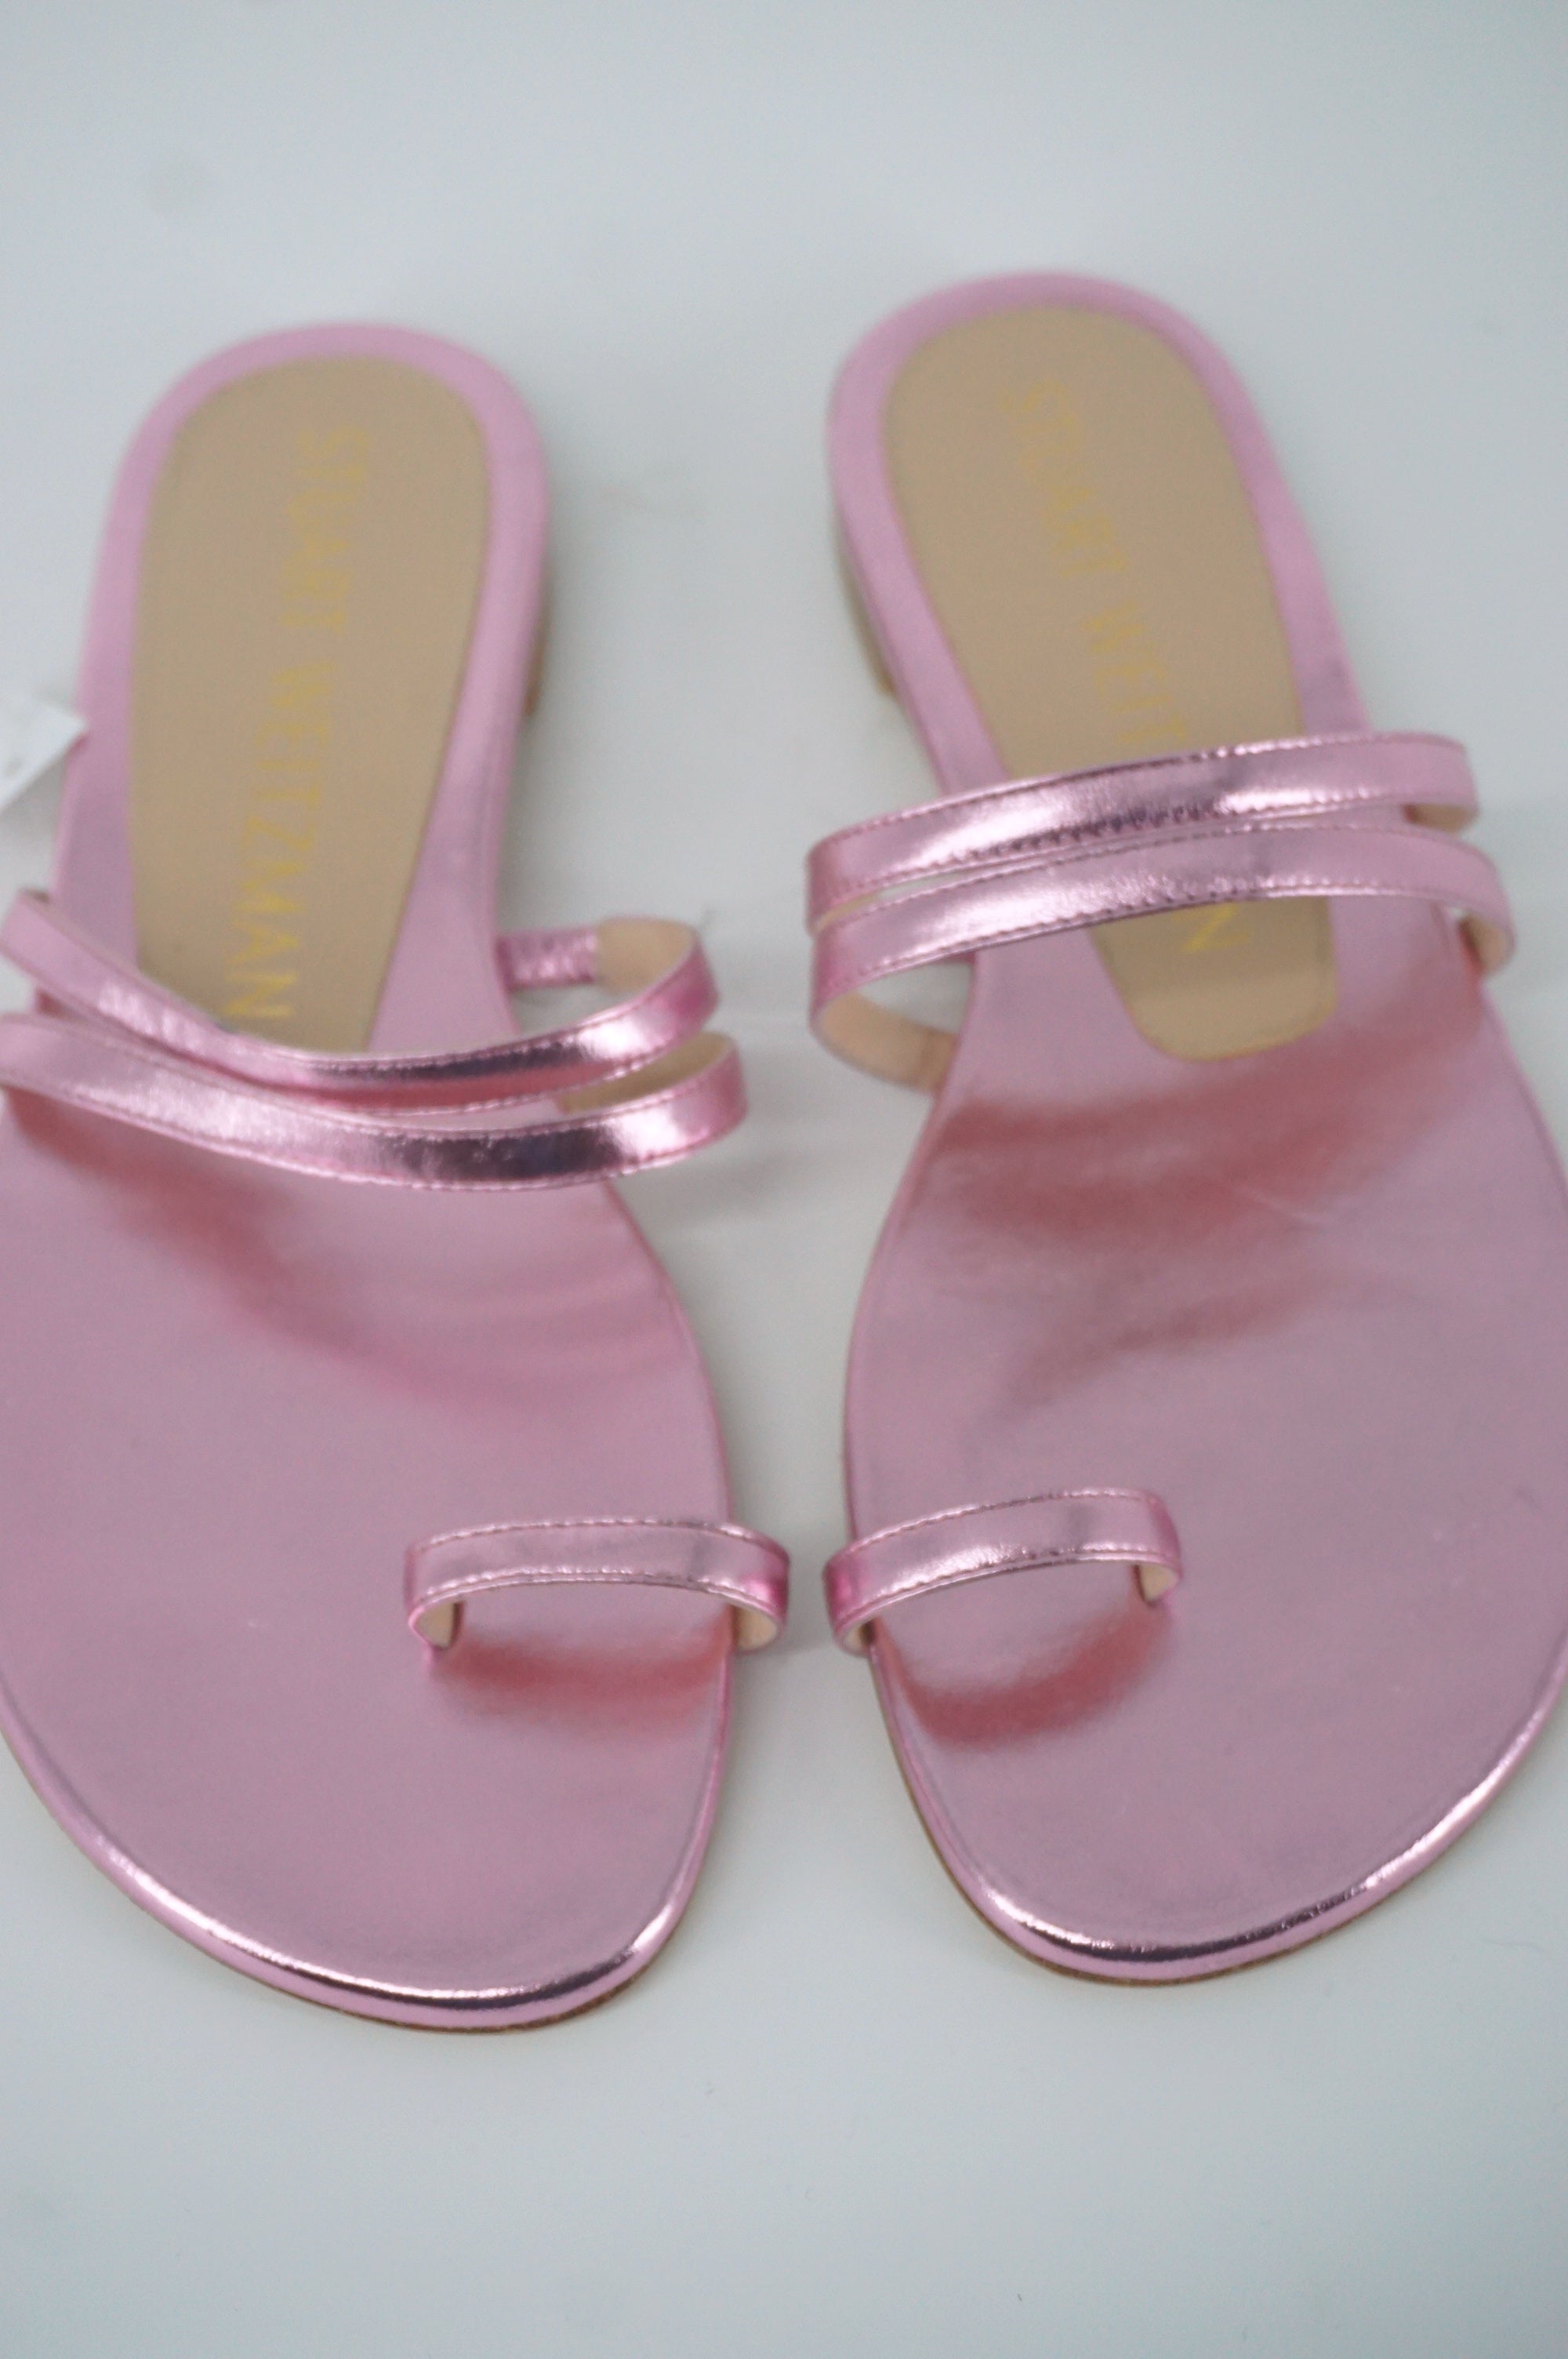 Stuart Weitzman Leonita Slide Pink Metallic Leather Sandals Size 6 New Flat $350